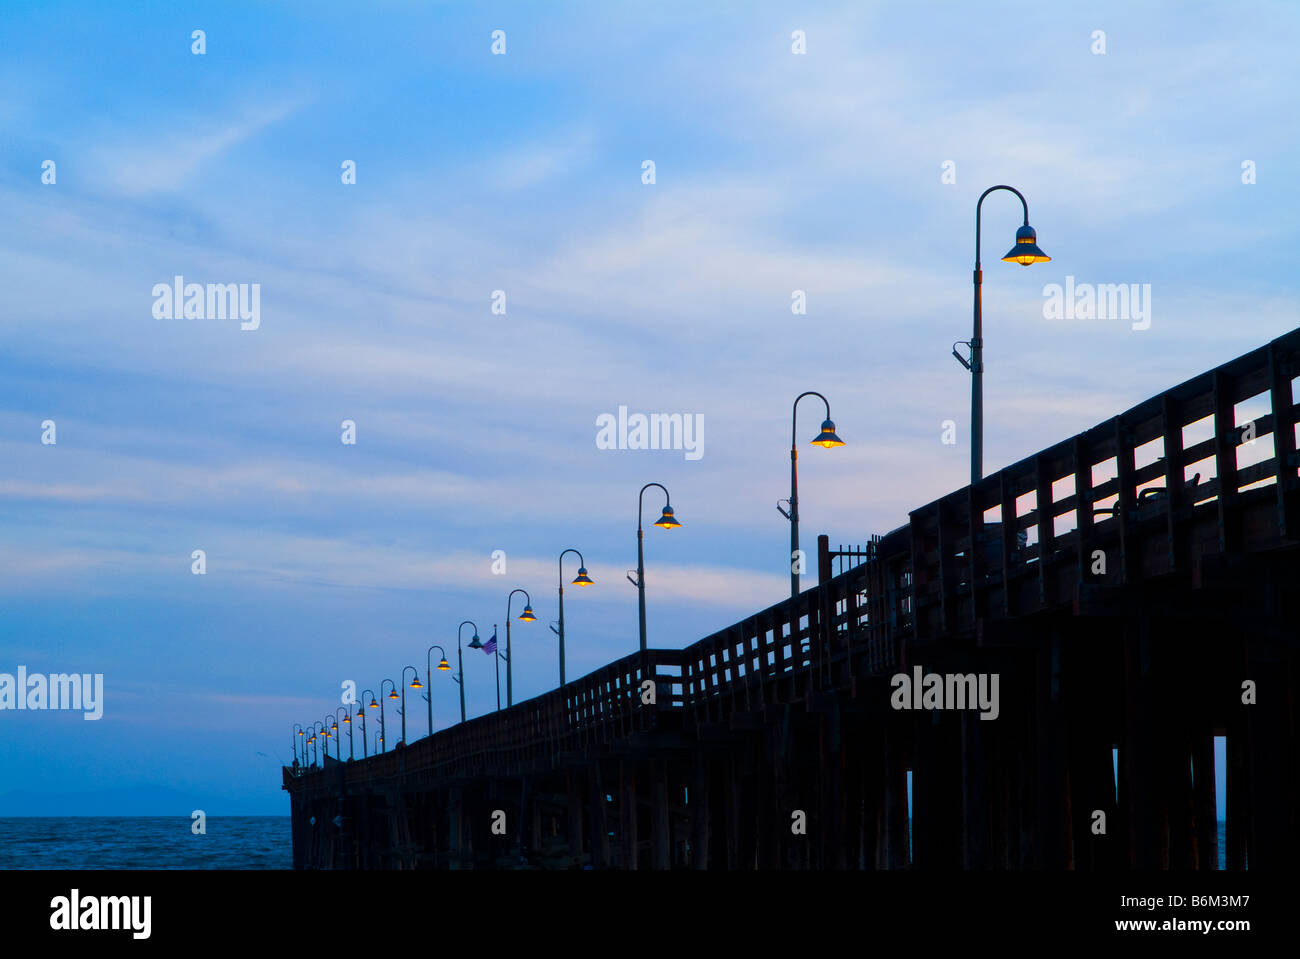 Ventura Pier With Row Of Light Posts Lamps At Sunset, Ventura California USA Stock Photo